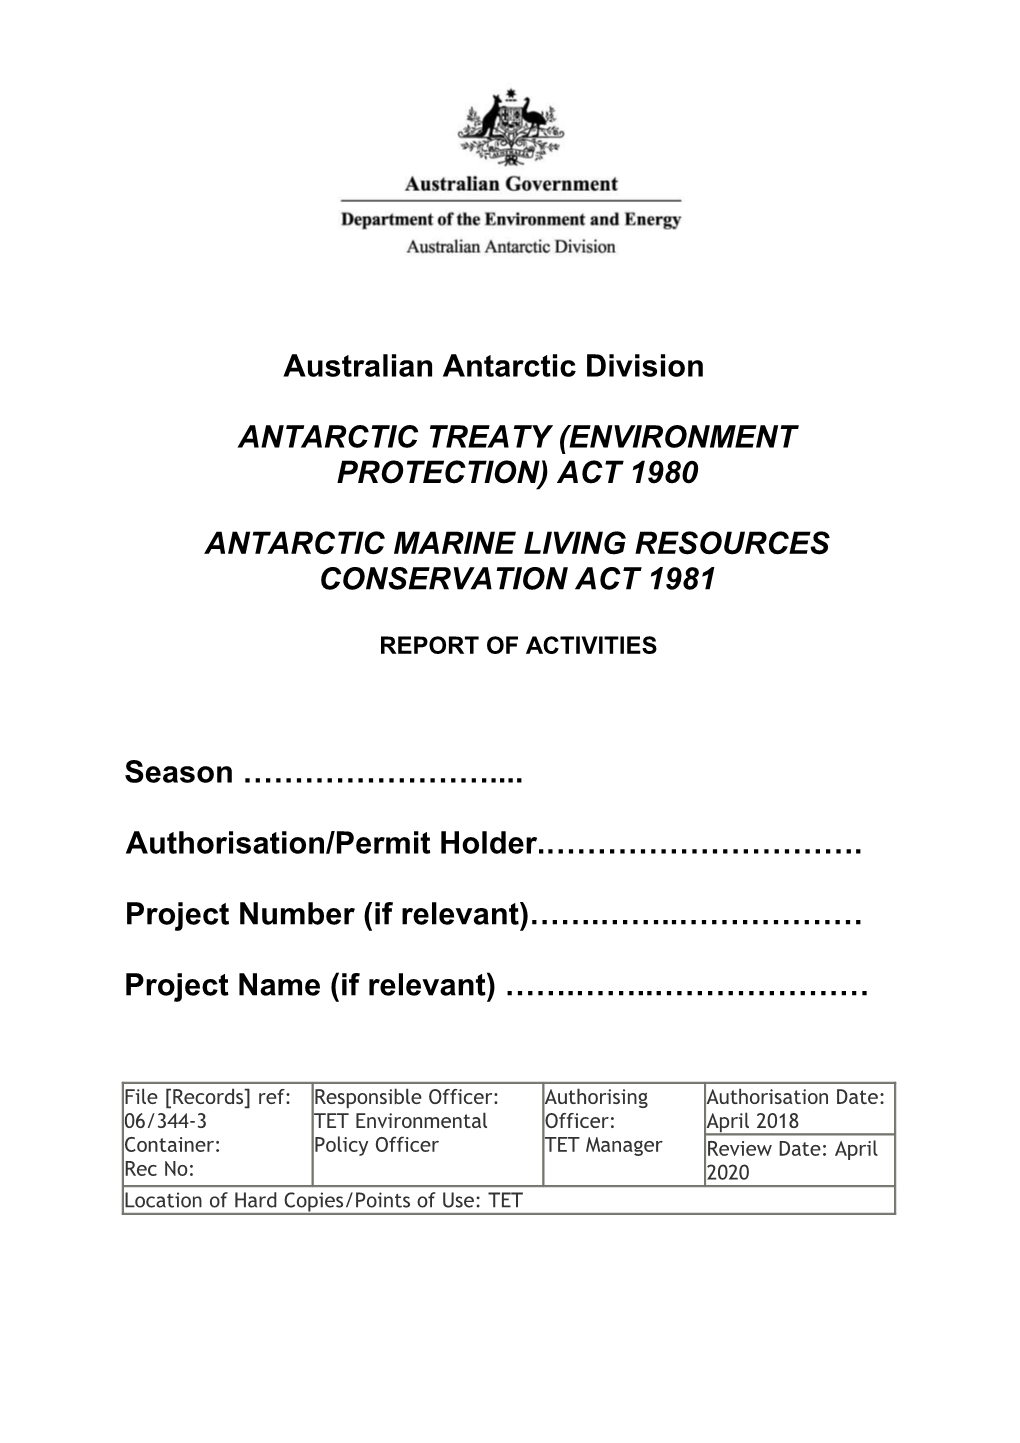 Antarctic Treaty (Environment Protection) Act 1980